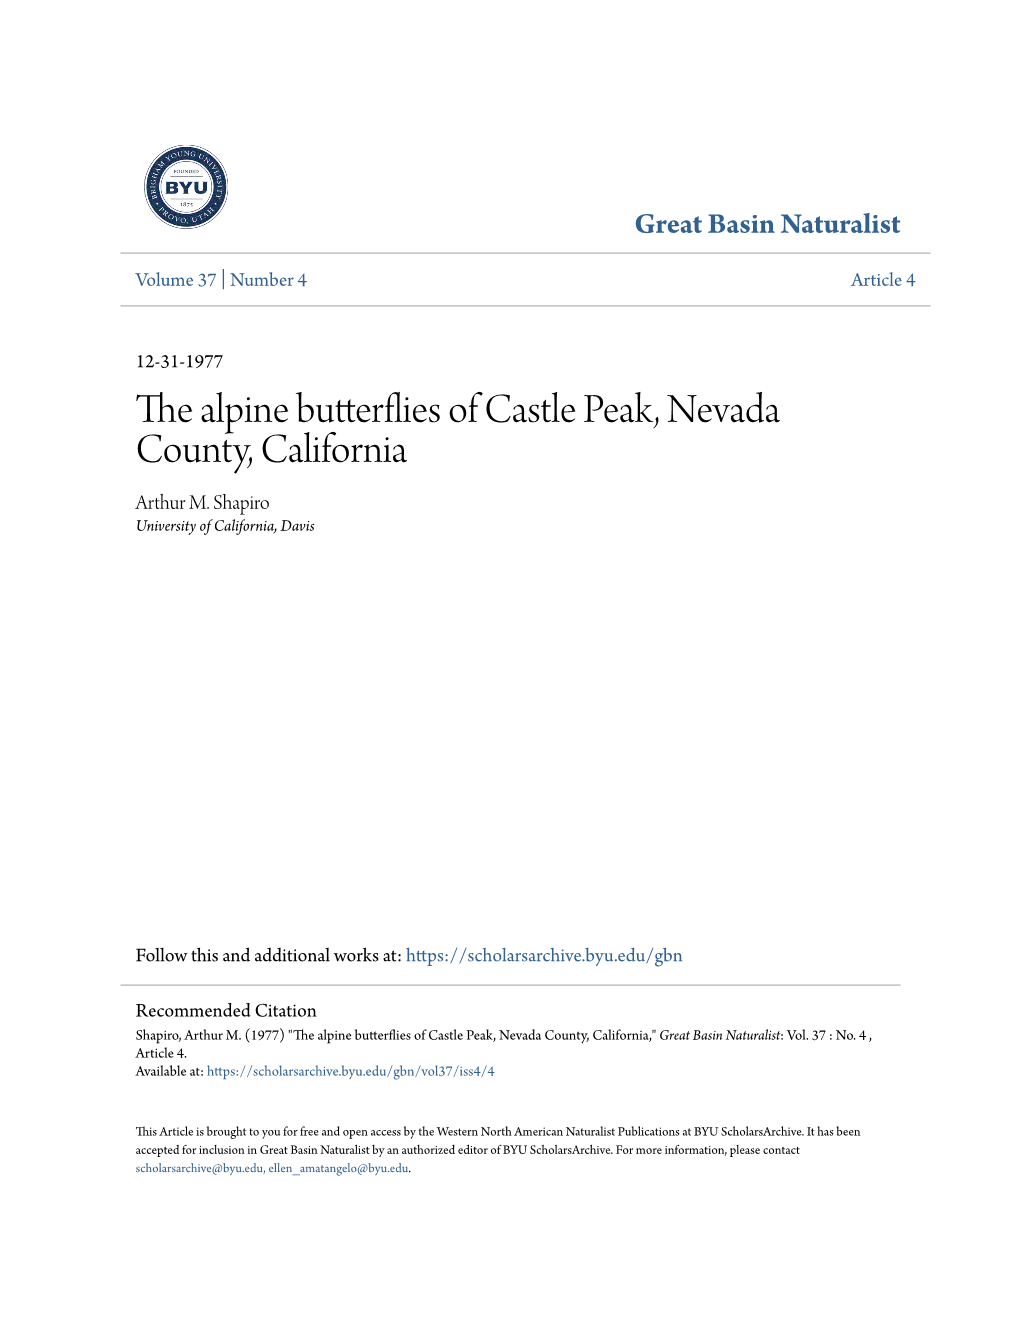 The Alpine Butterflies of Castle Peak, Nevada County, California," Great Basin Naturalist: Vol